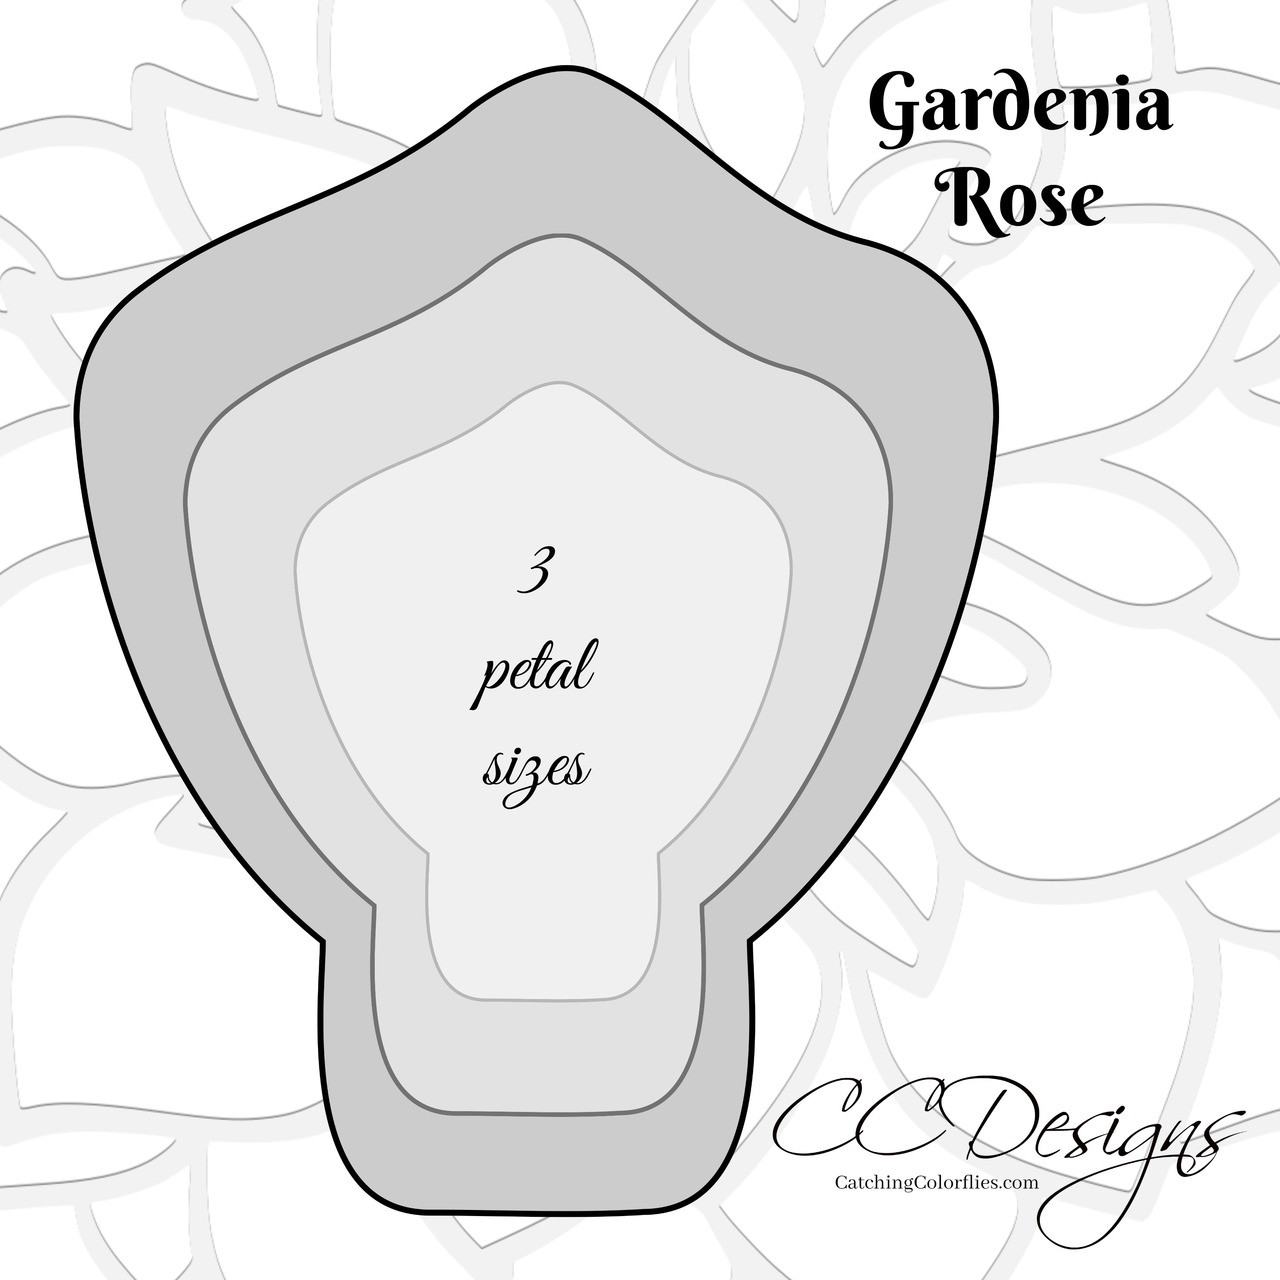 Gardenia Rose Giant Flower Template - Catching Colorflies